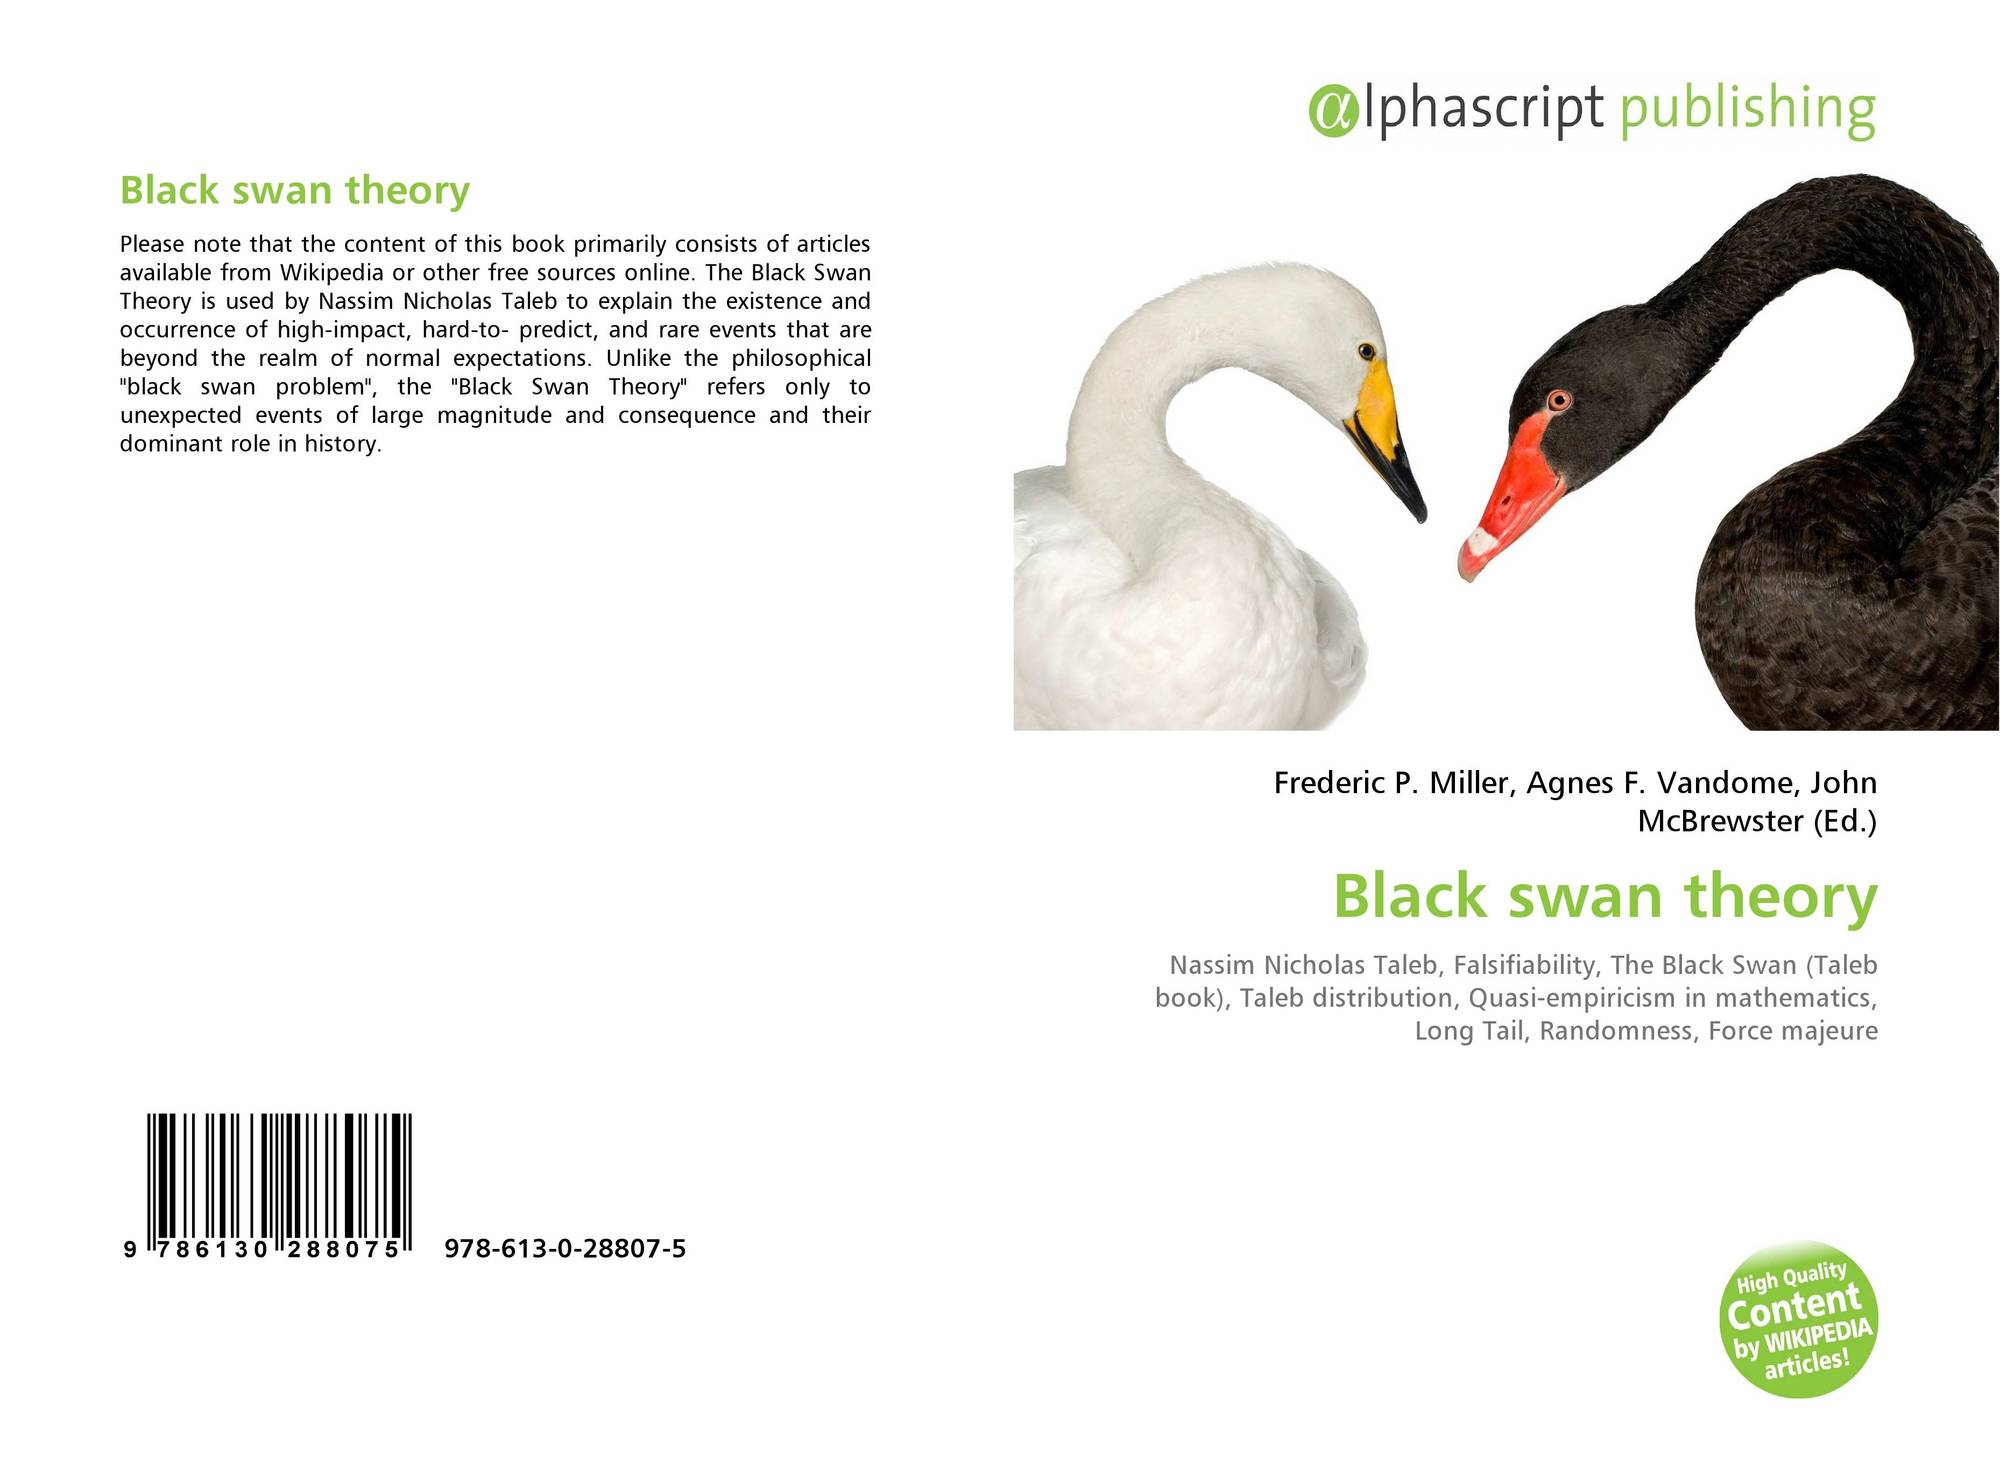 Antarktis maling ildsted Black swan theory, 978-613-0-28807-5, 6130288077 ,9786130288075